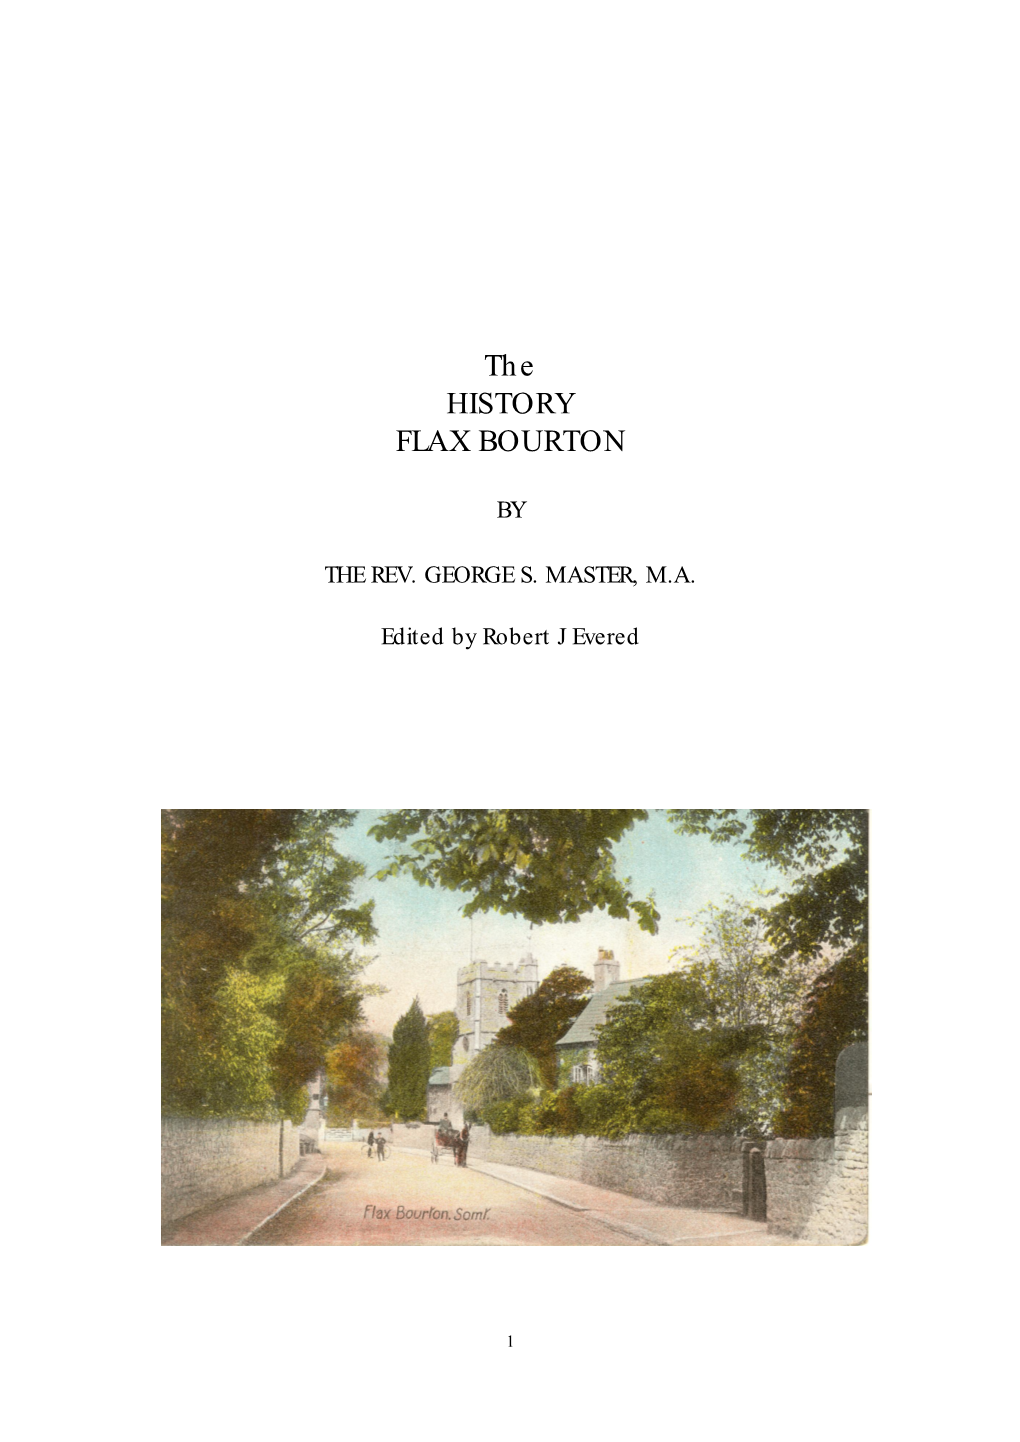 The HISTORY FLAX BOURTON